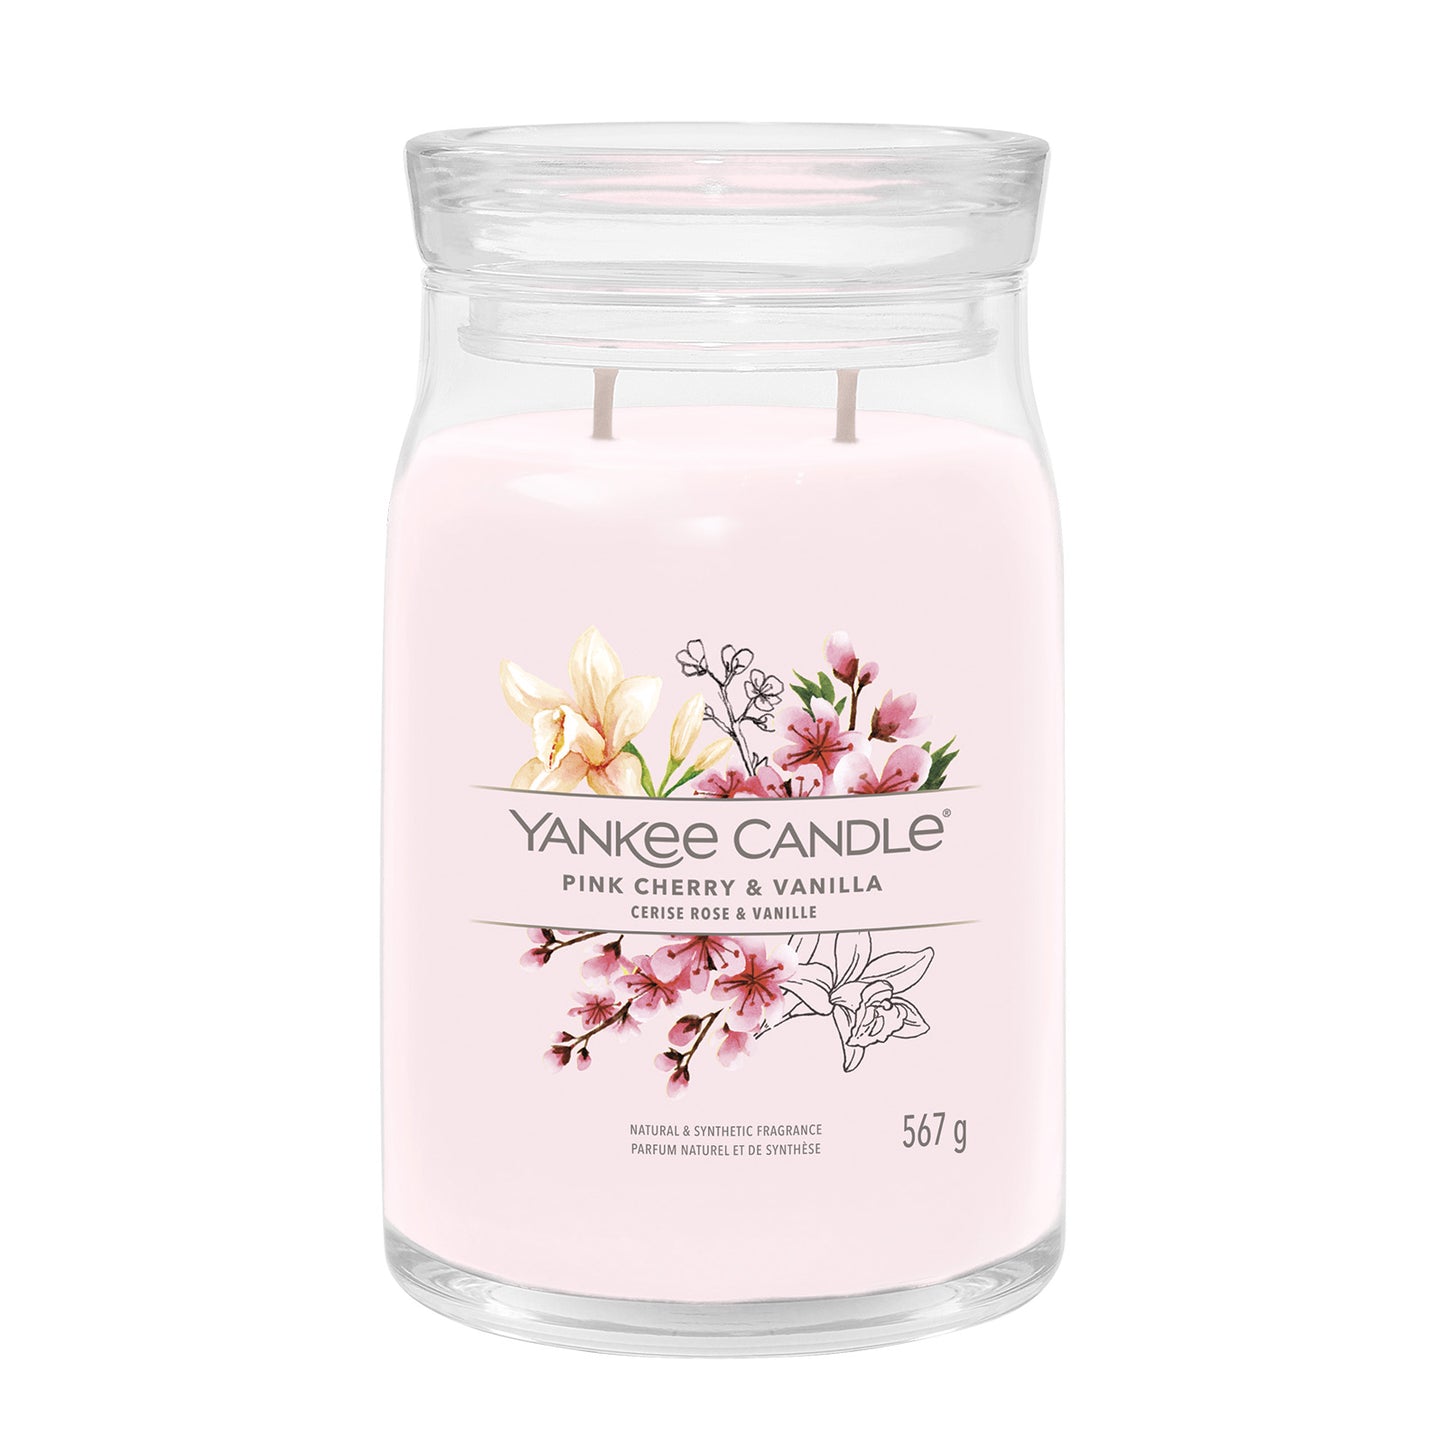 Yankee Candle Pink Cherry and Vanilla Signature Large Jar